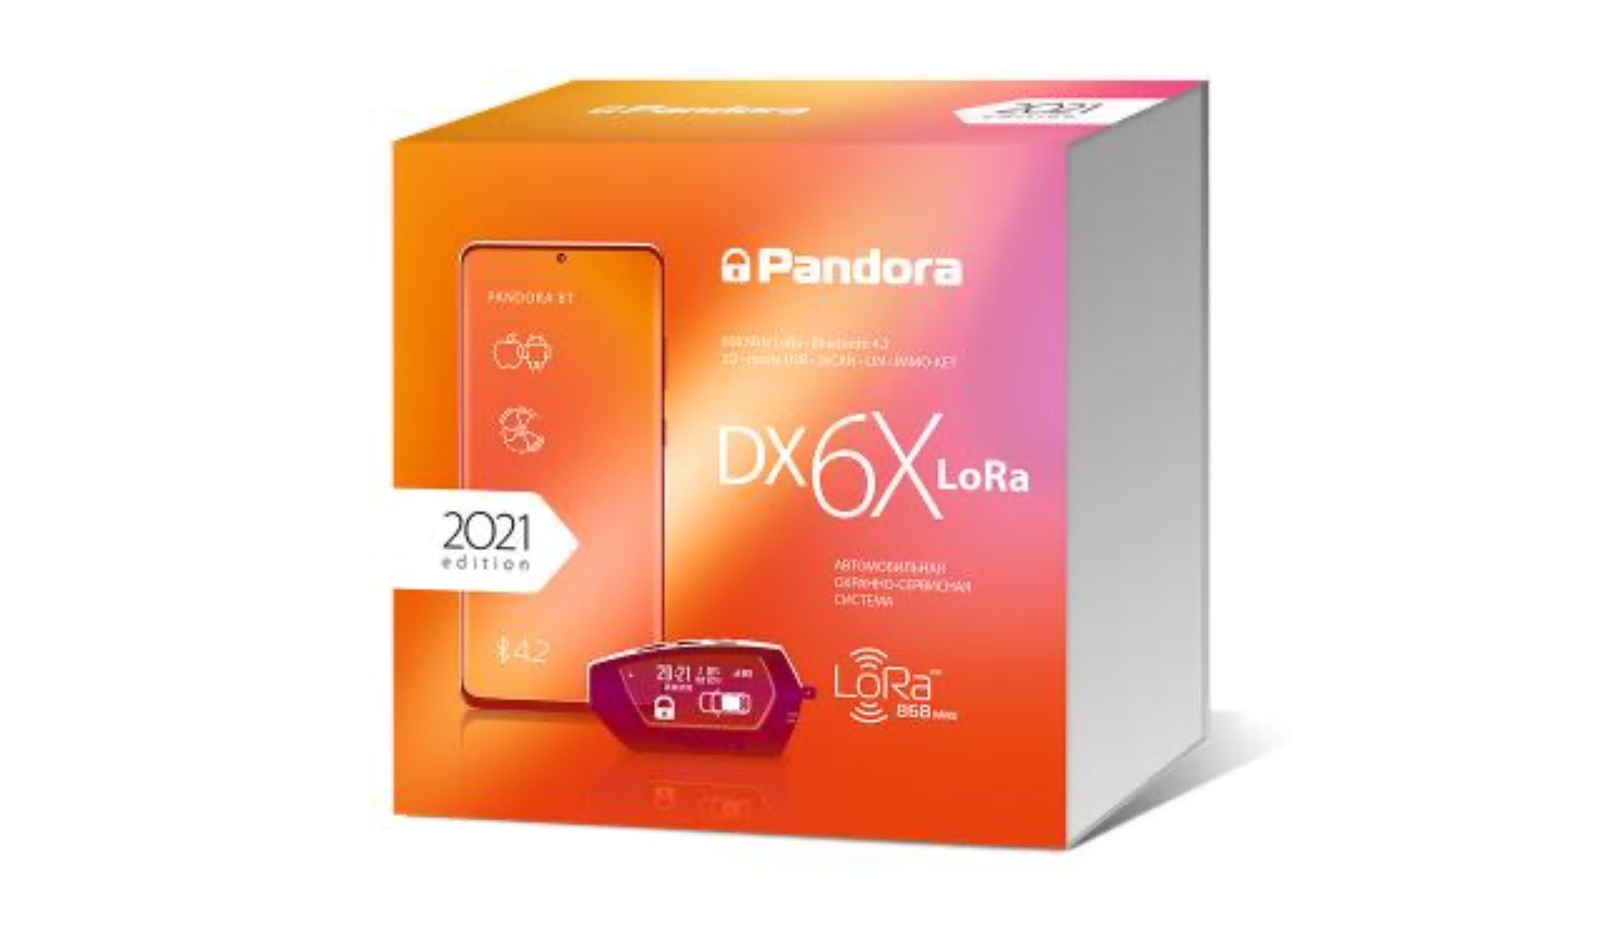 Pandora DX-6x LoRa Пандора (Pandora)